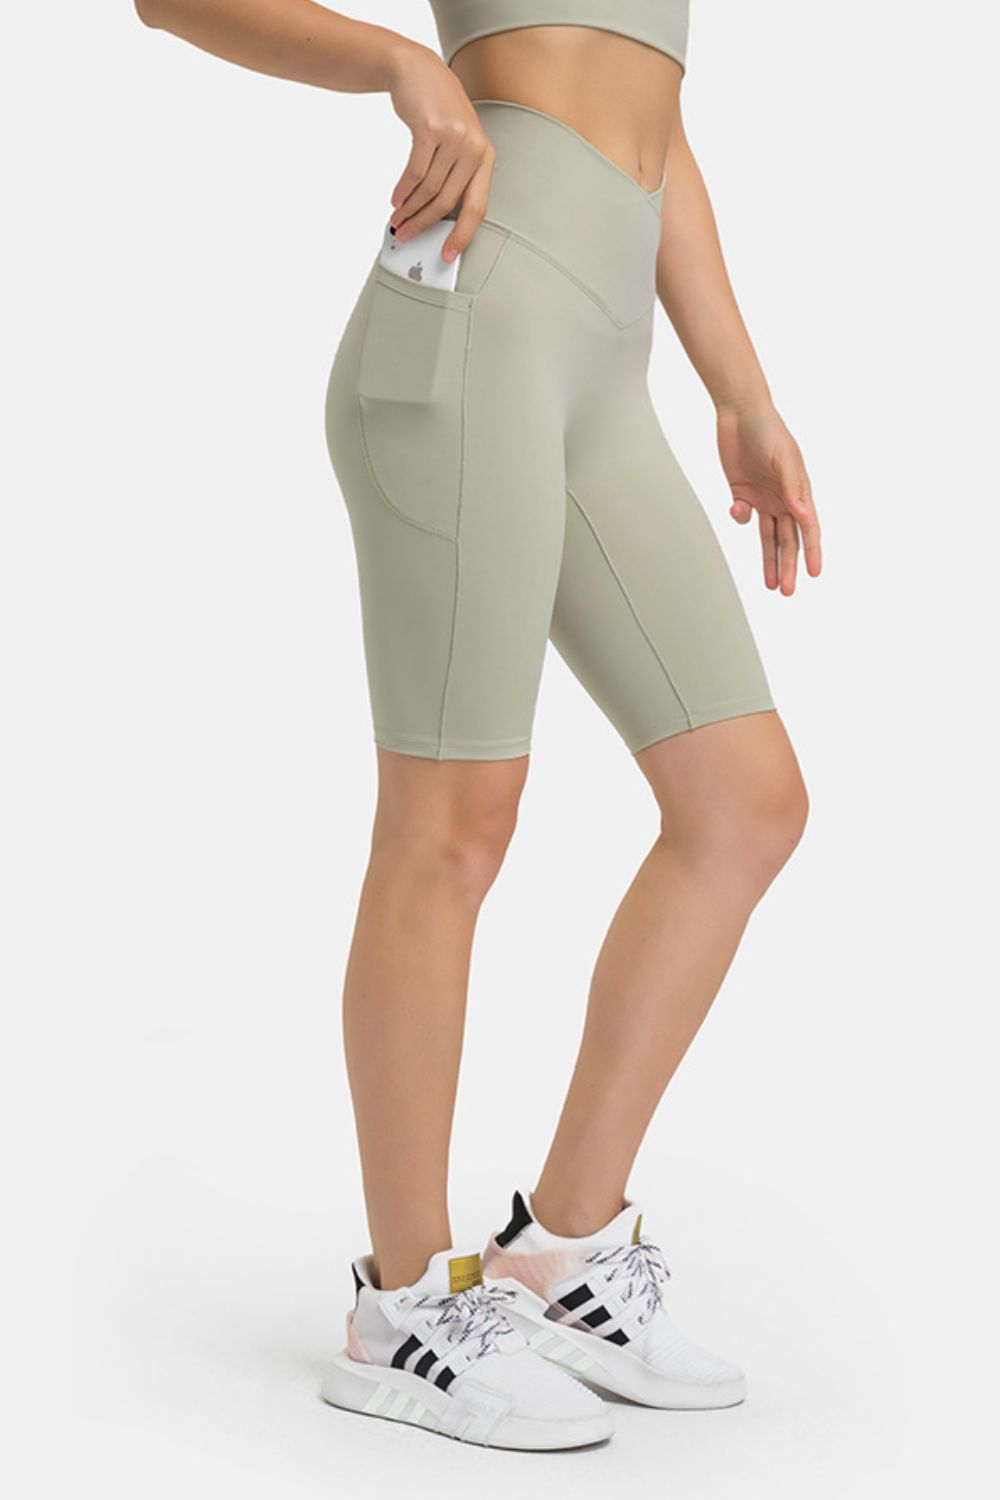 High Waist Biker Shorts with Pockets - DromedarShop.com Online Boutique